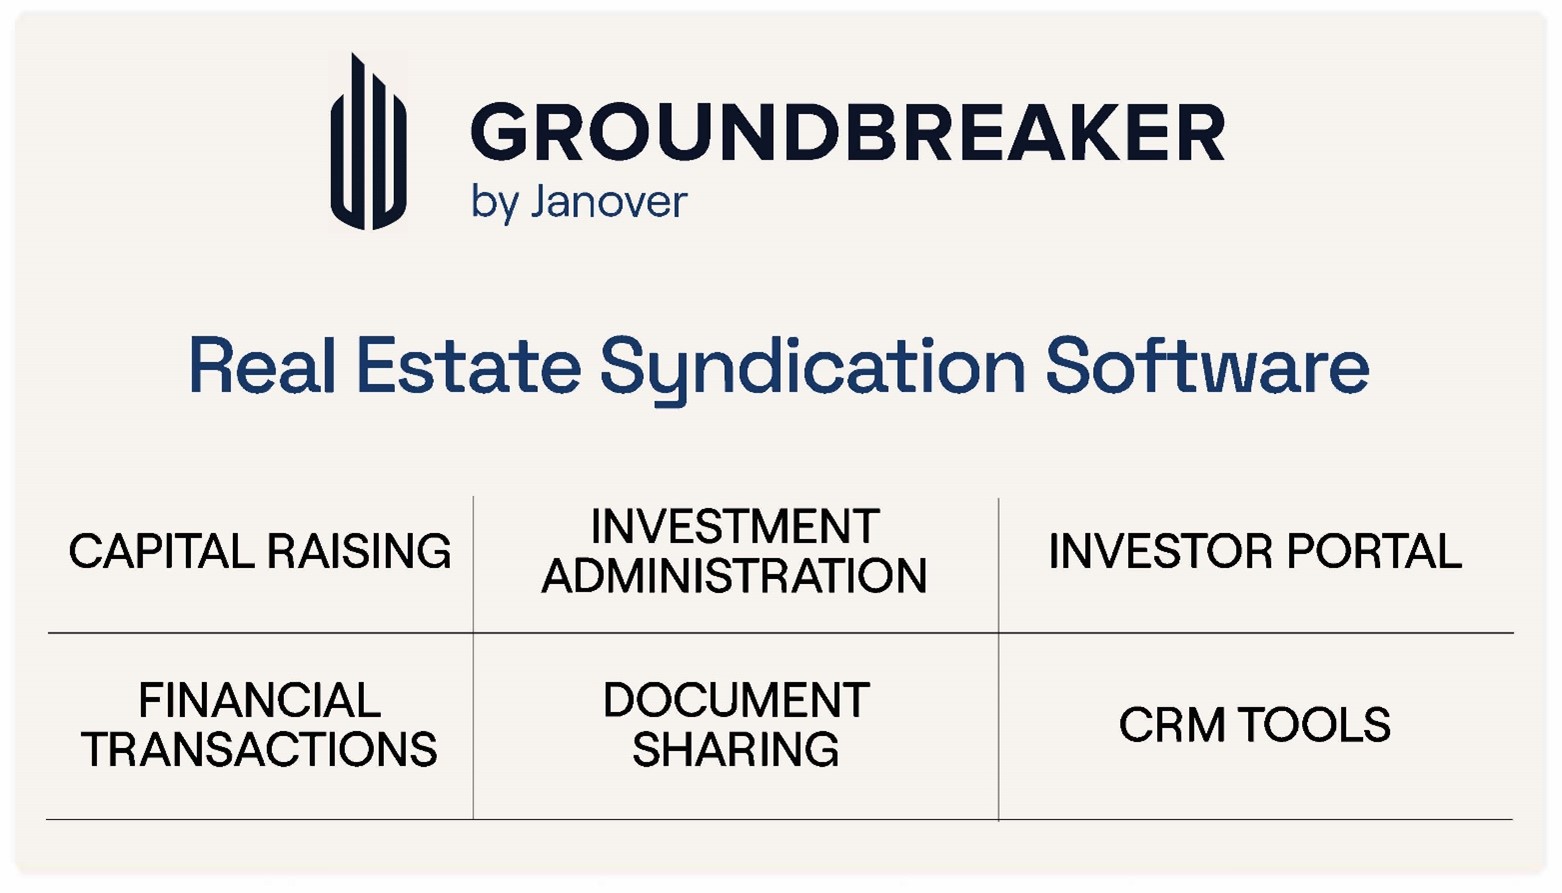 Groundbreaker Real Estate Syndication Software